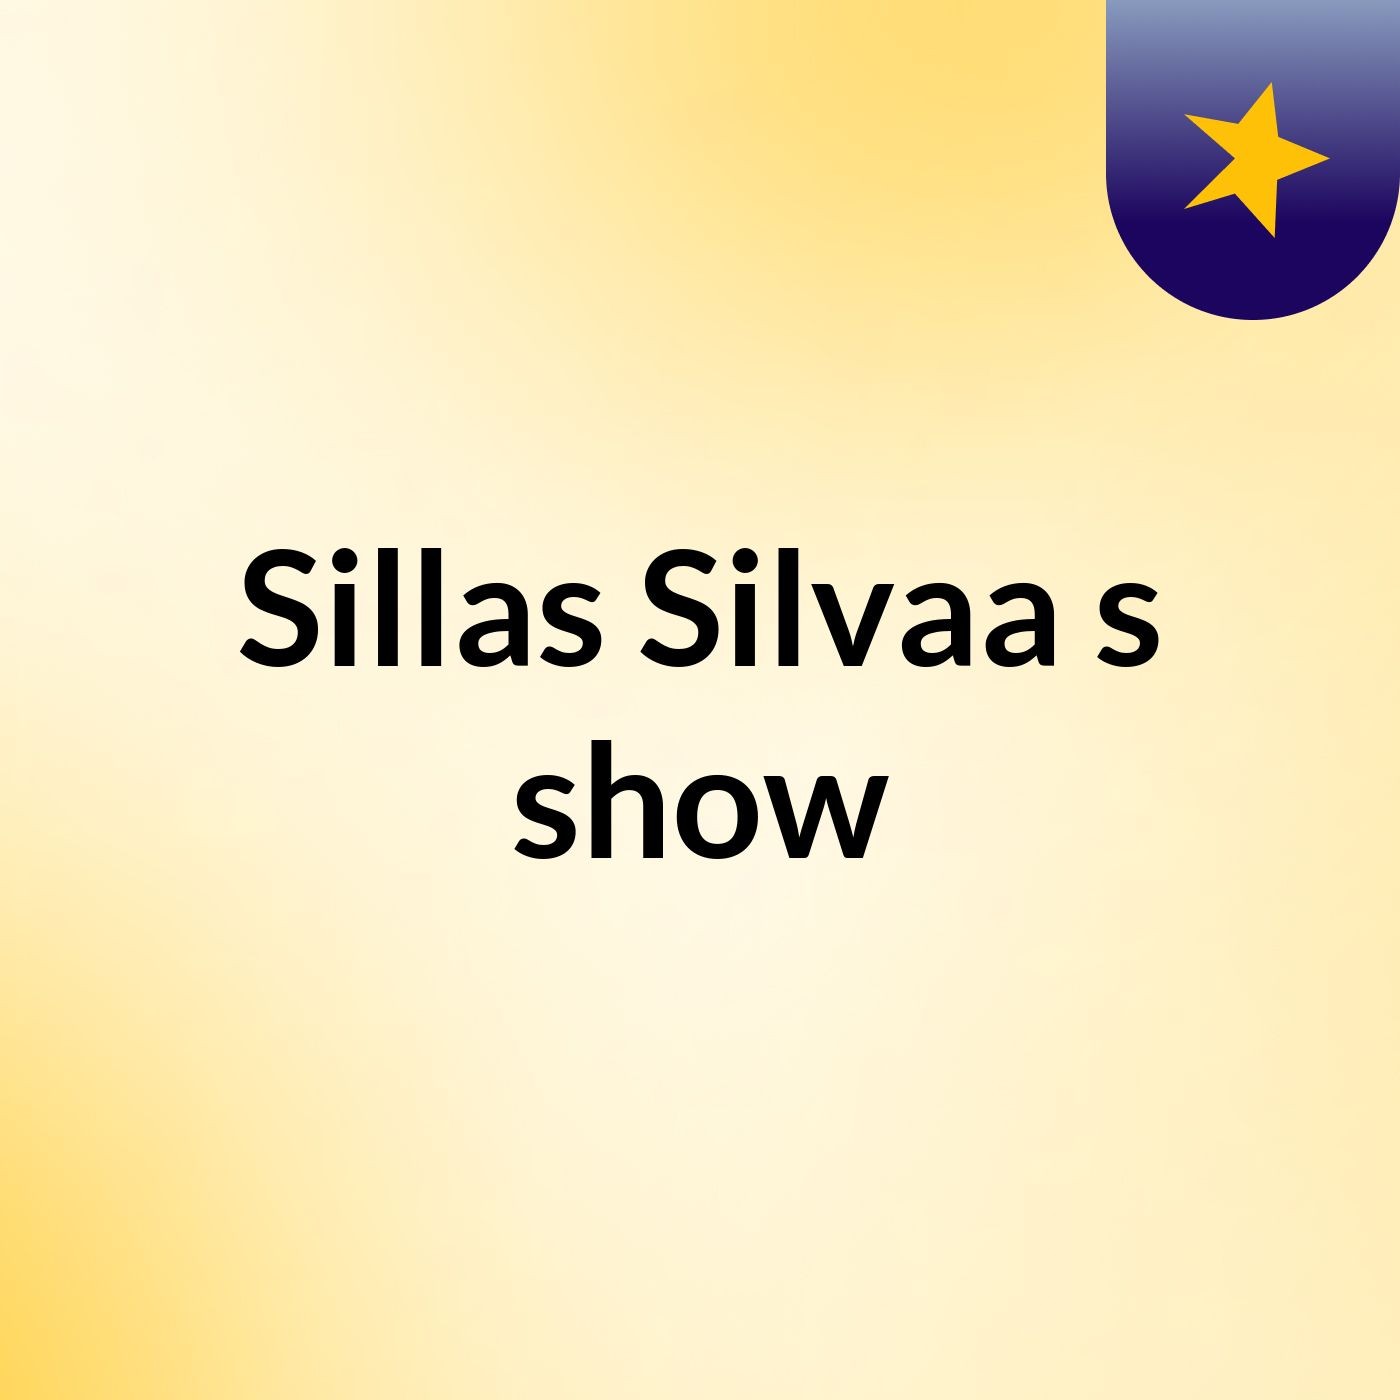 Sillas Silvaa's show